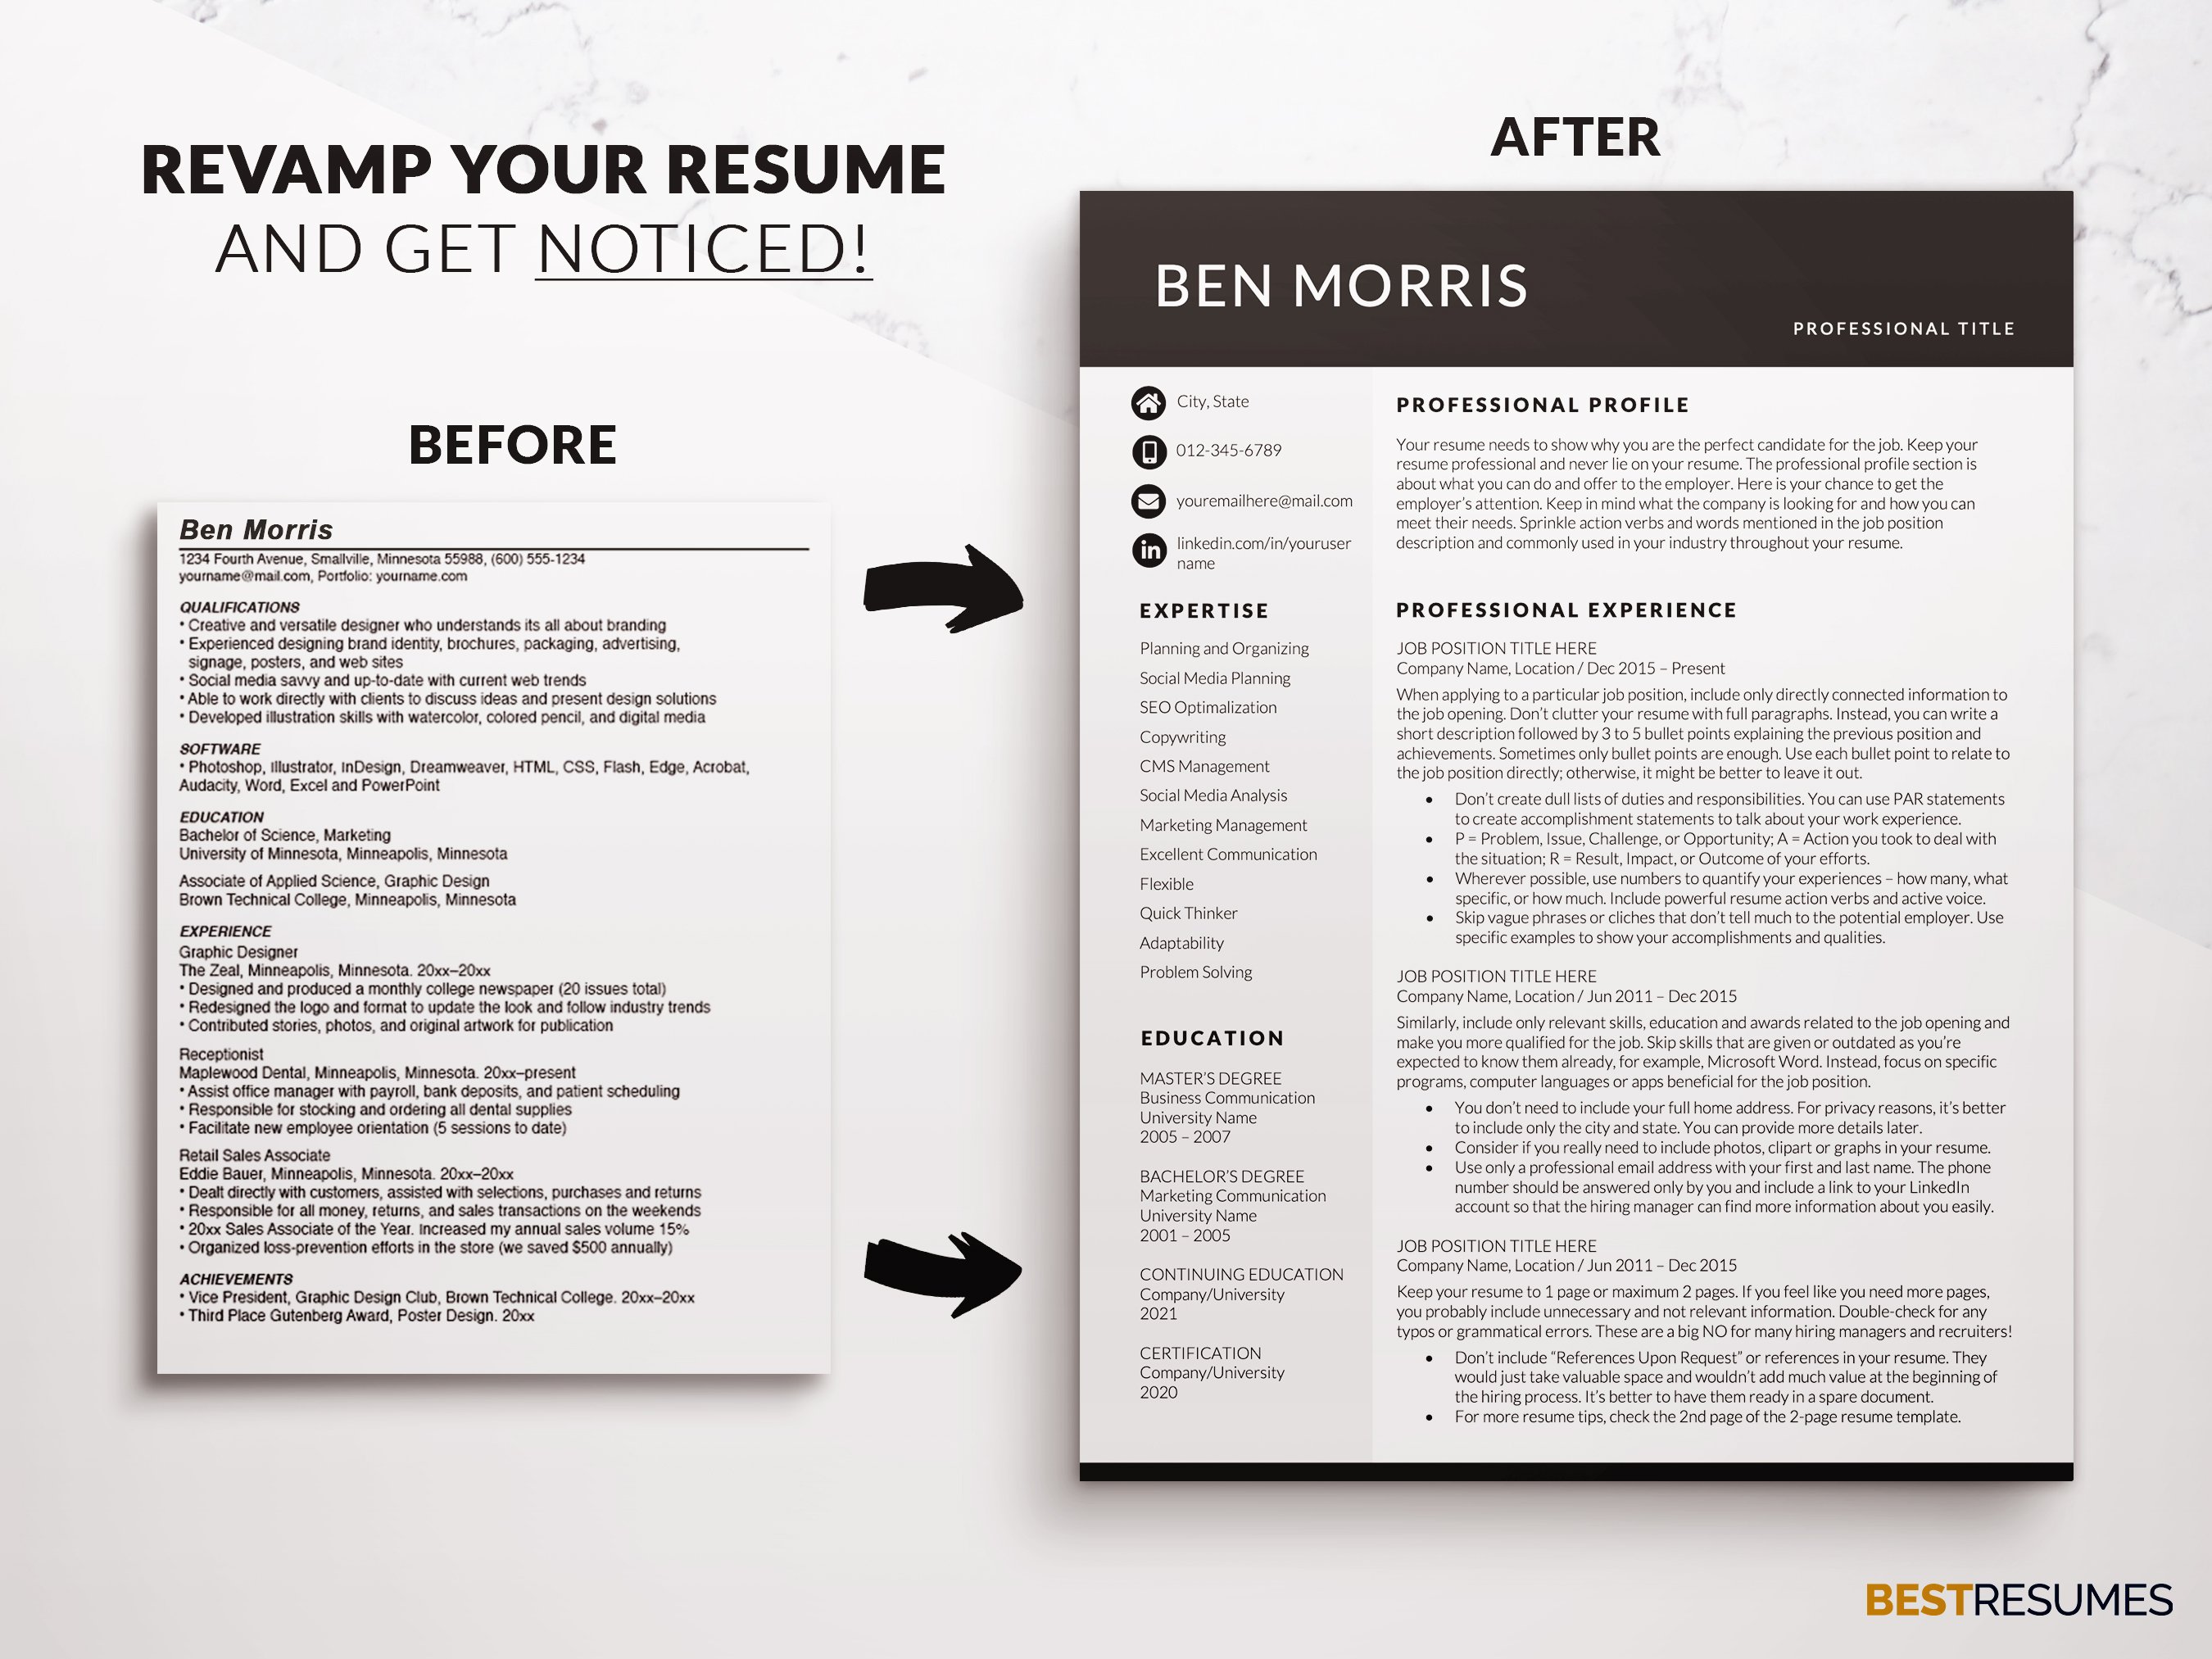 professional resume template modern page revamp resume ben morris 399